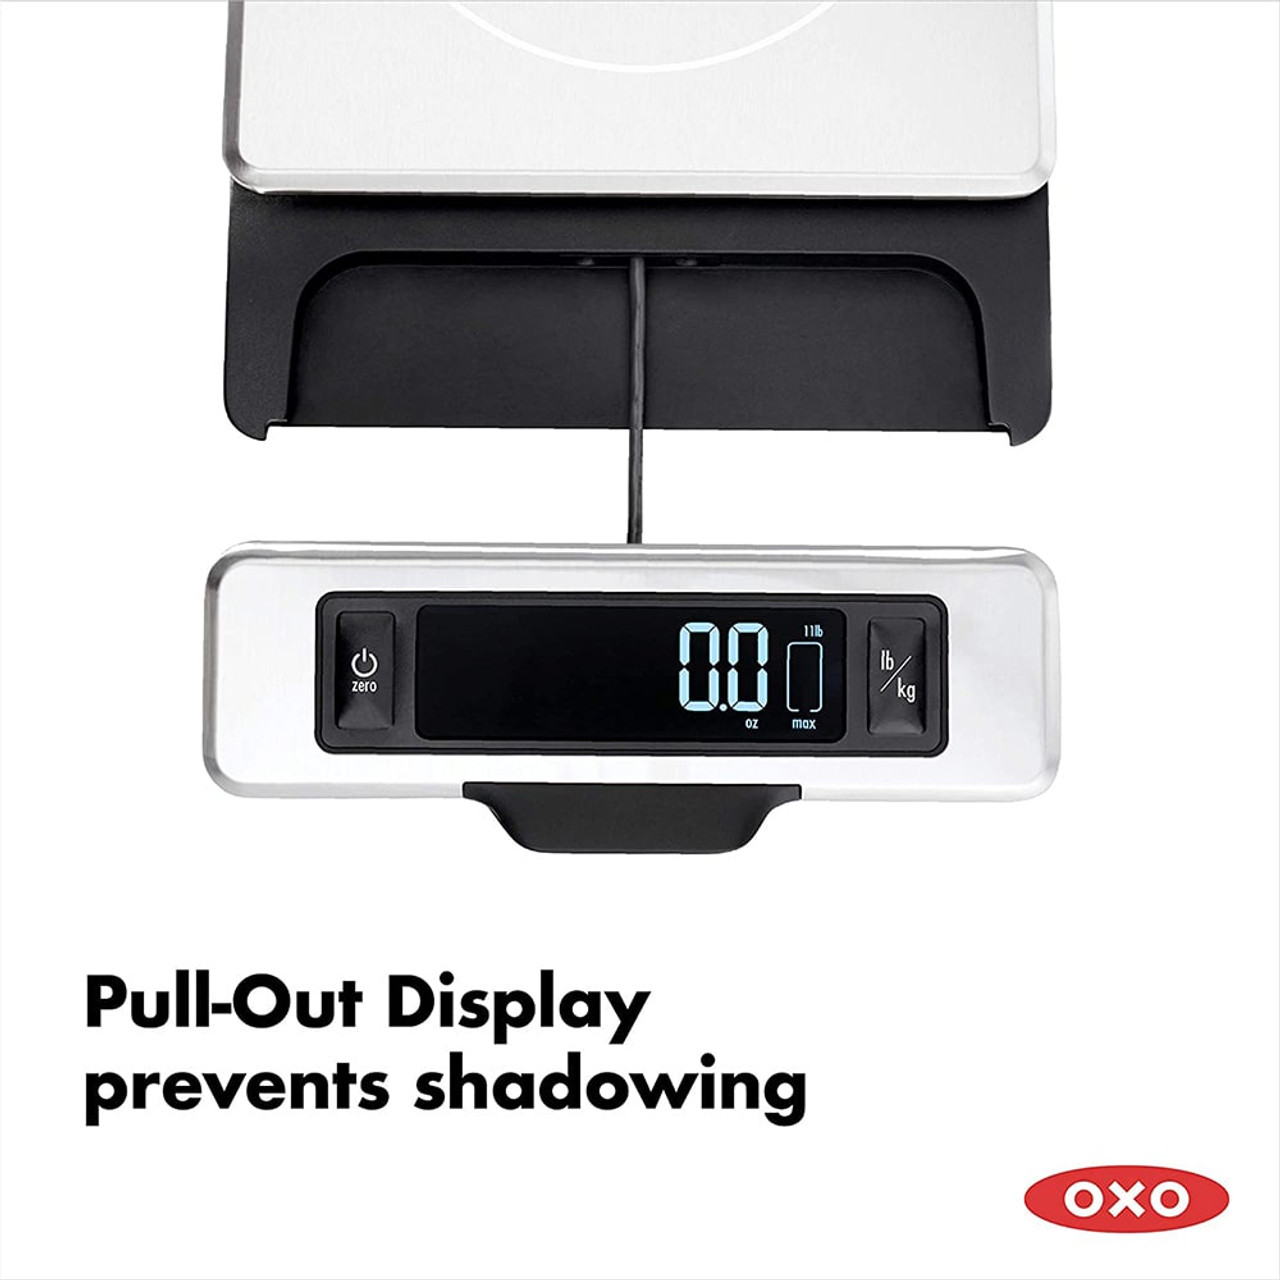 OXO 11lb Scale